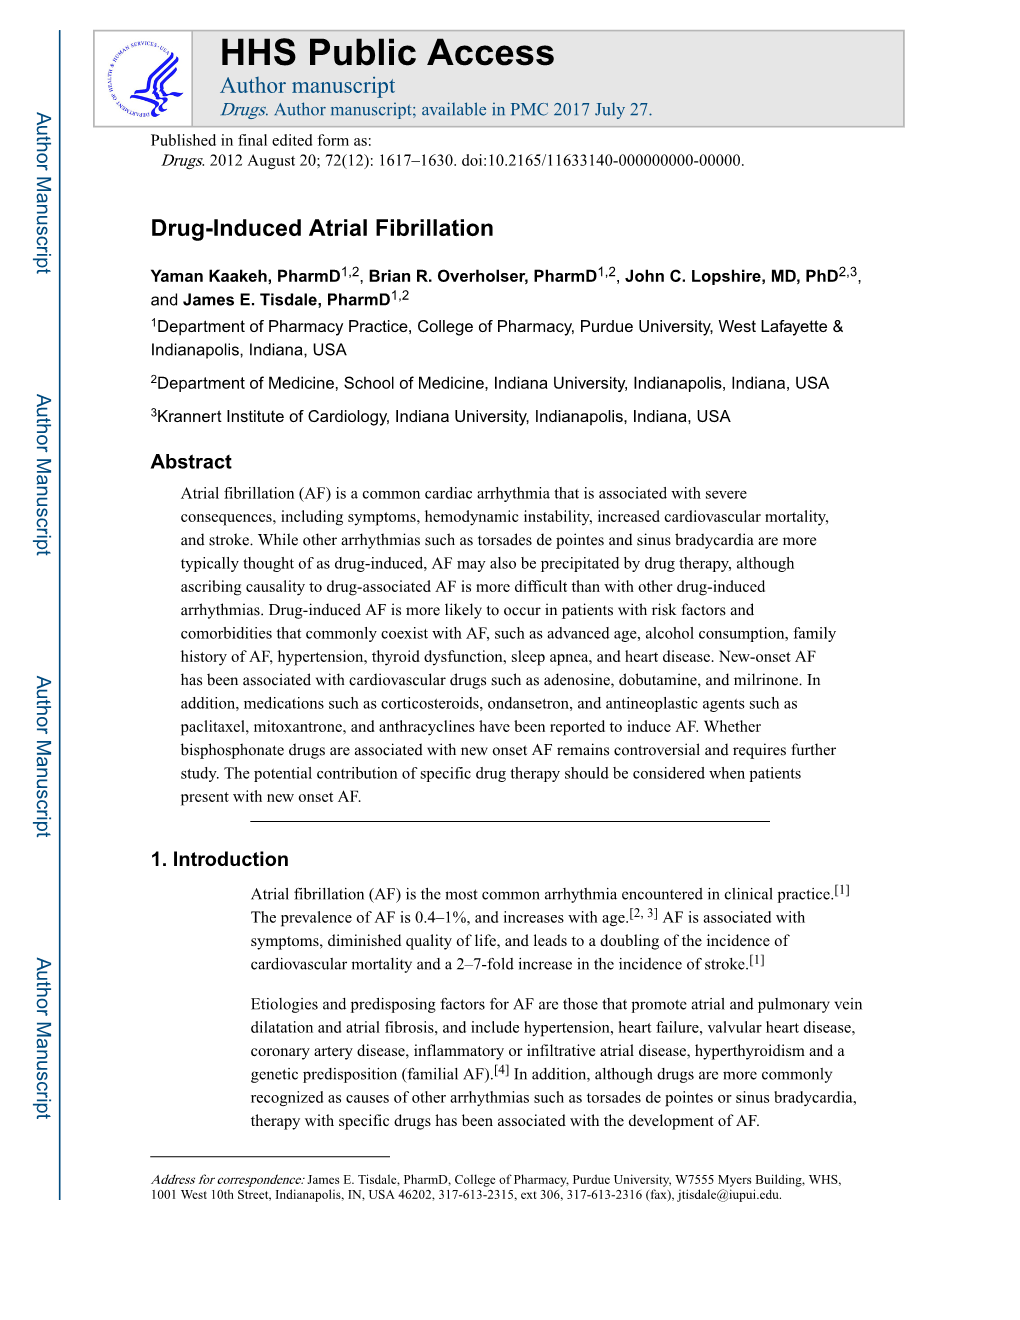 Drug-Induced Atrial Fibrillation